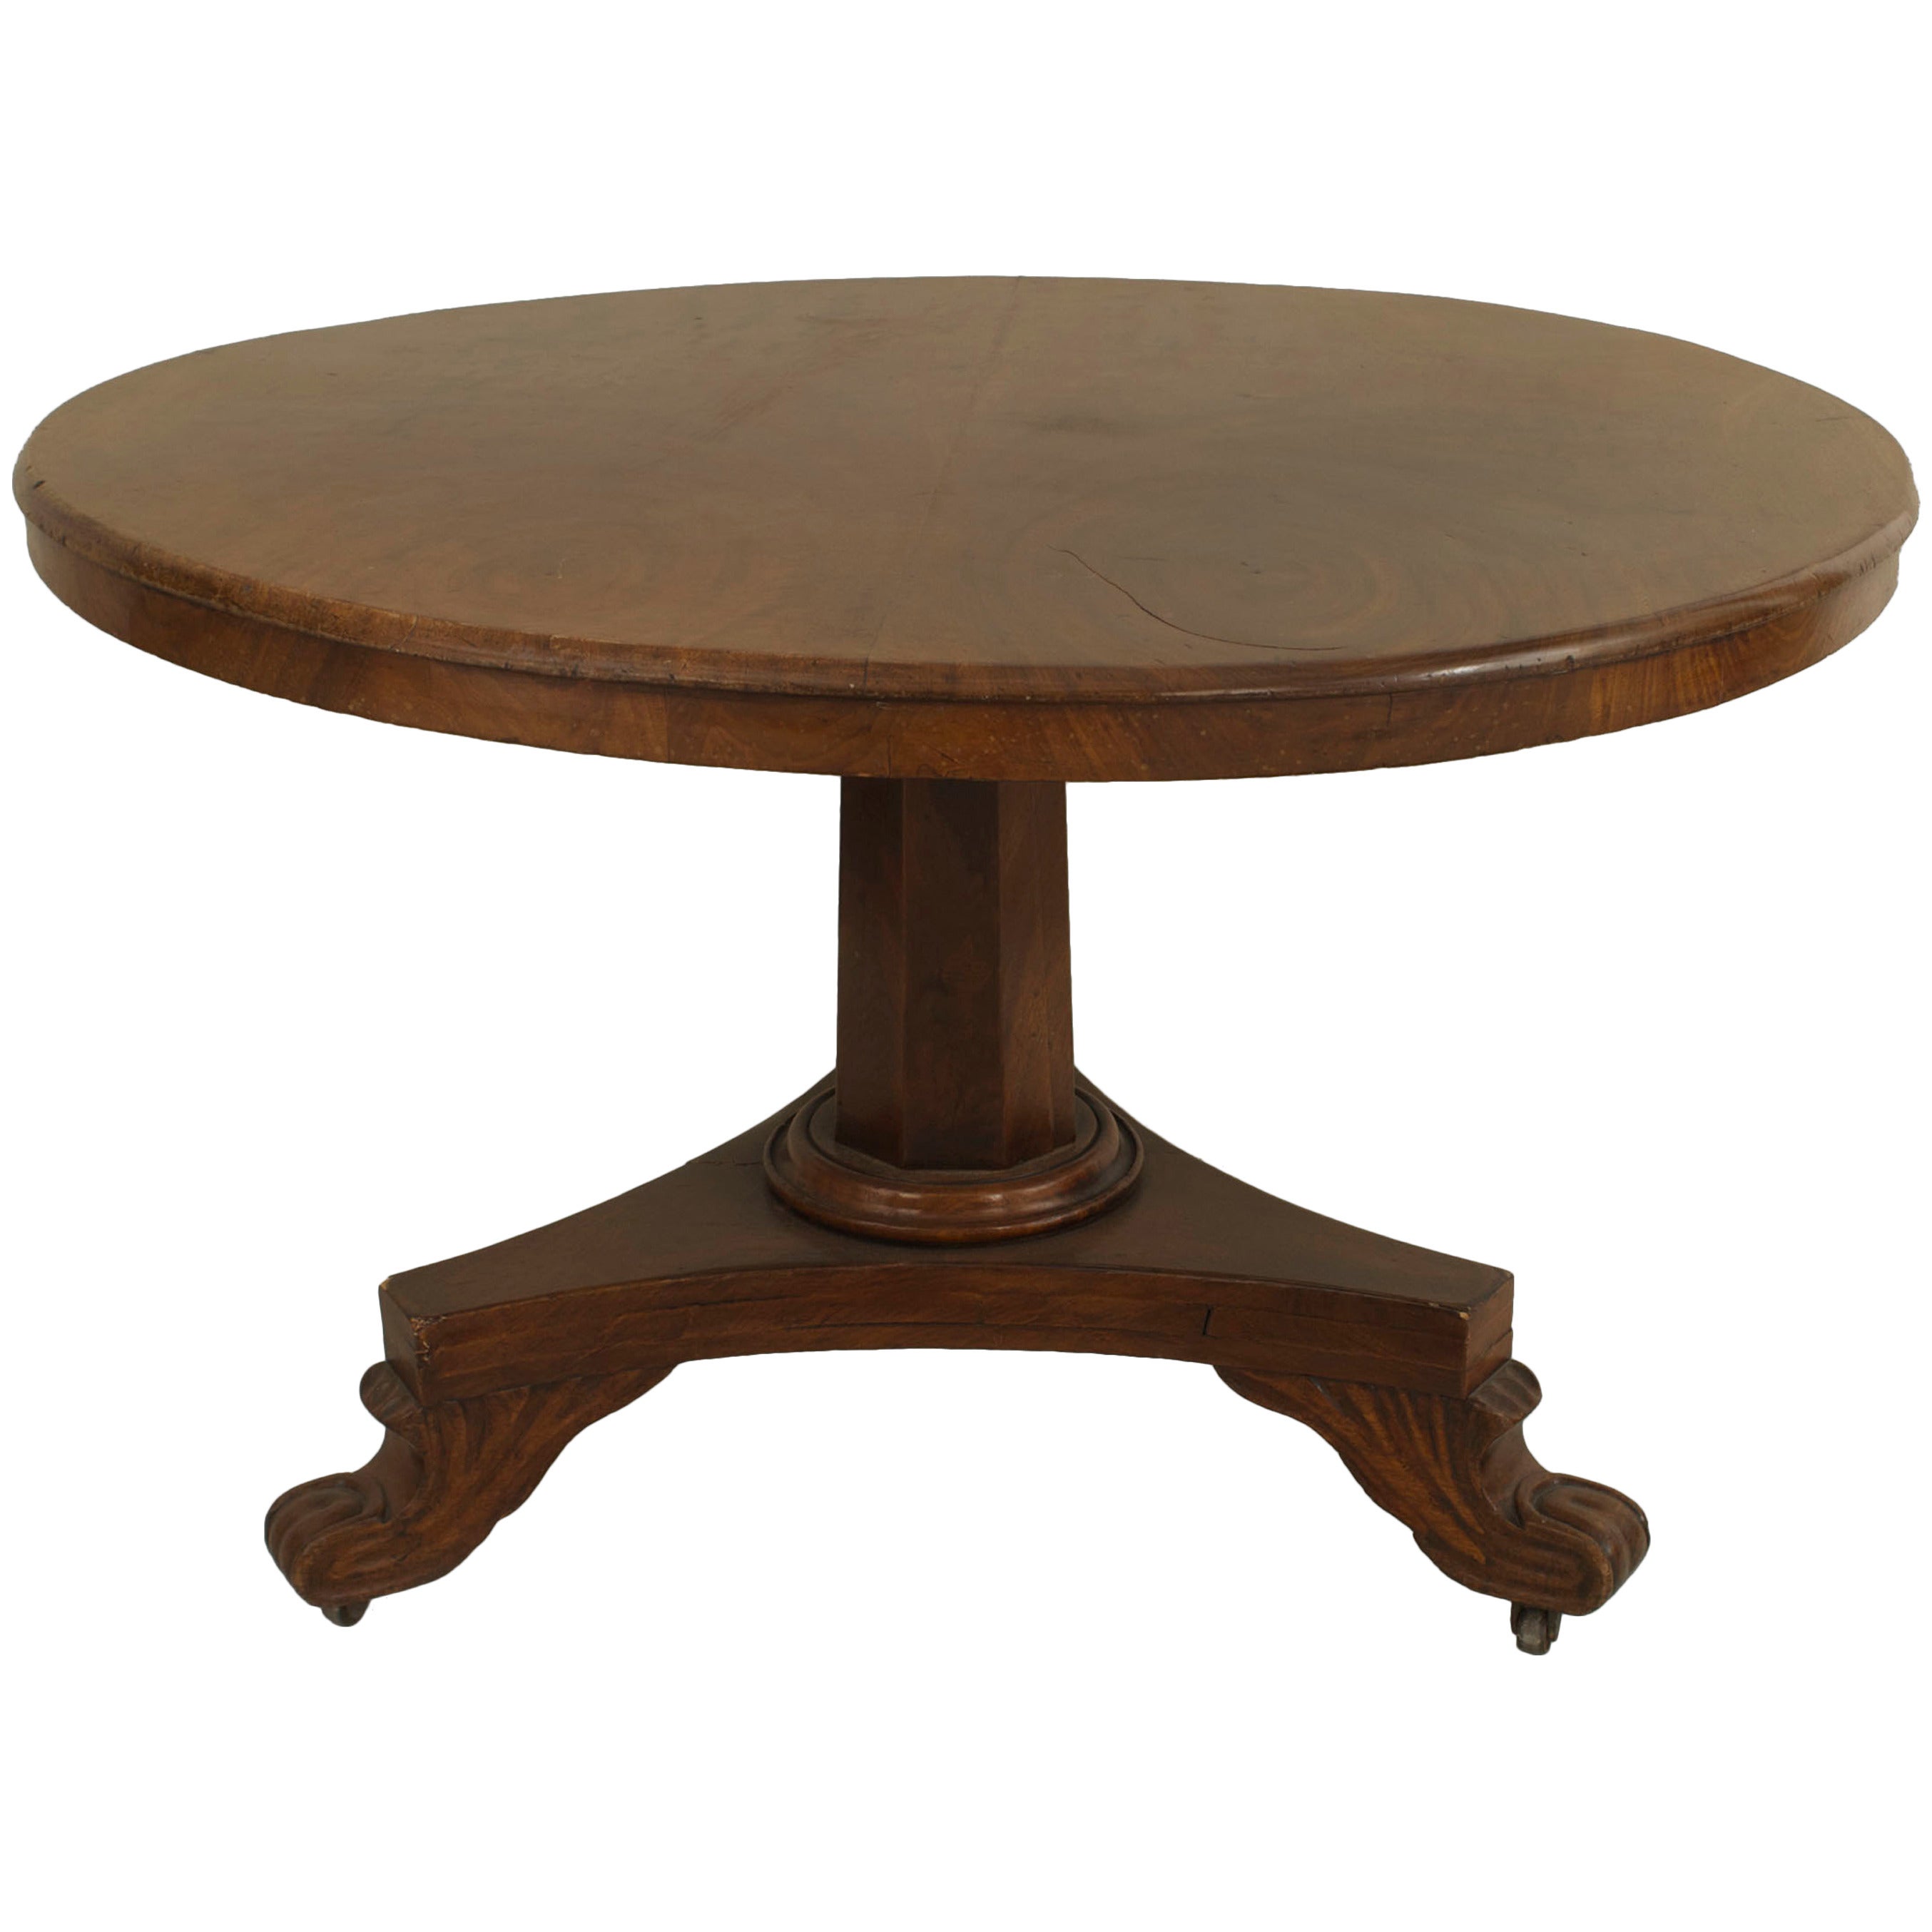 19th Century English Regency Style Circular Mahogany Center Table